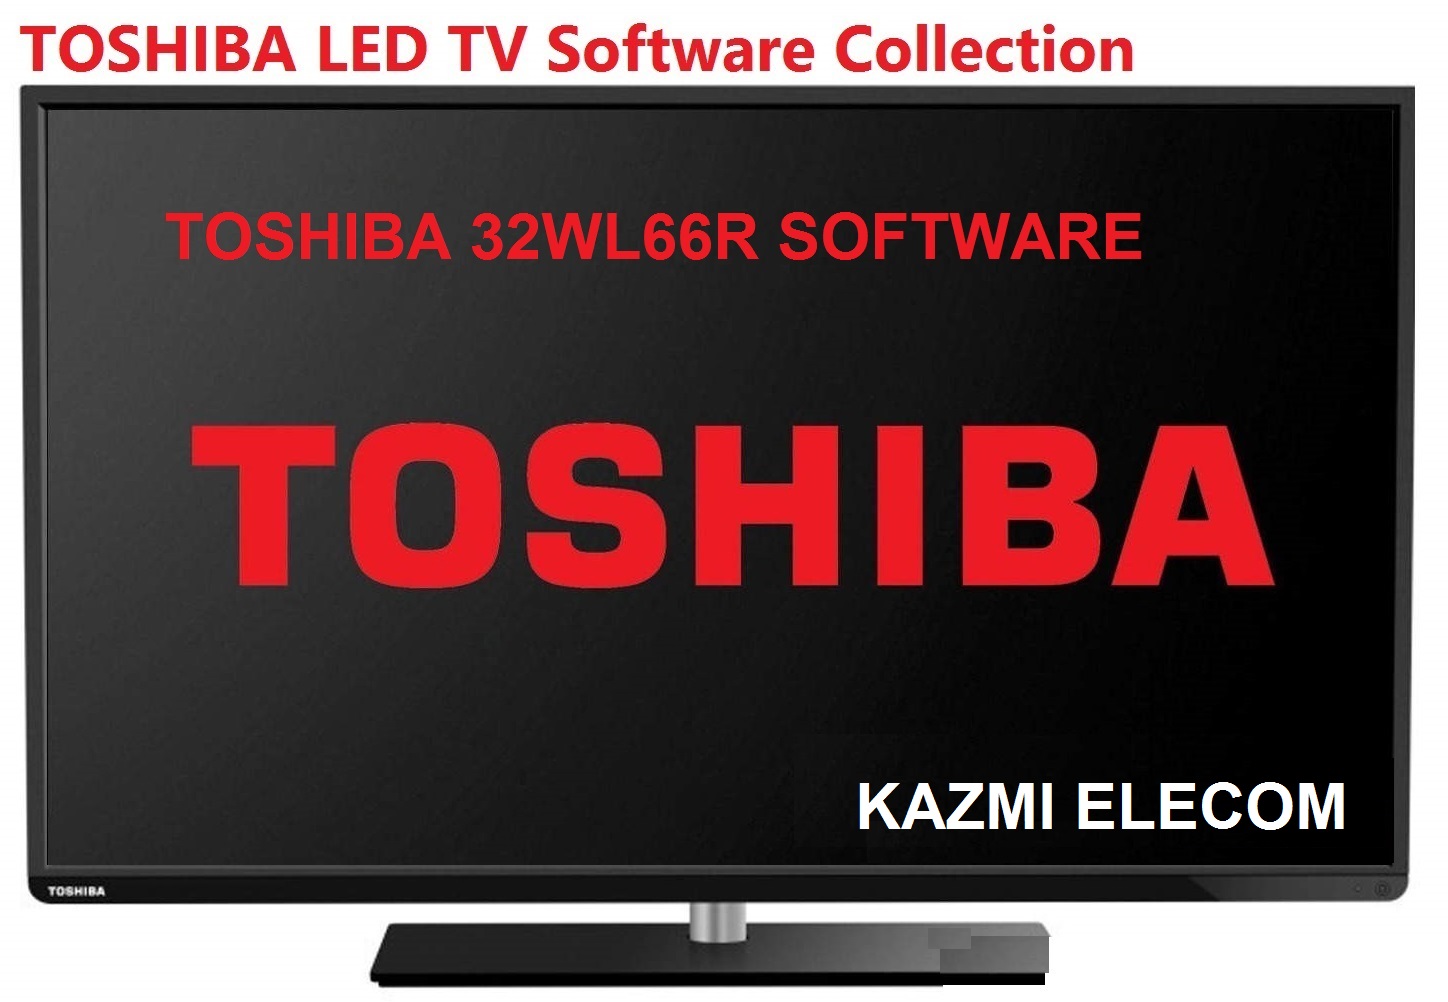 Toshiba 32Wl66R